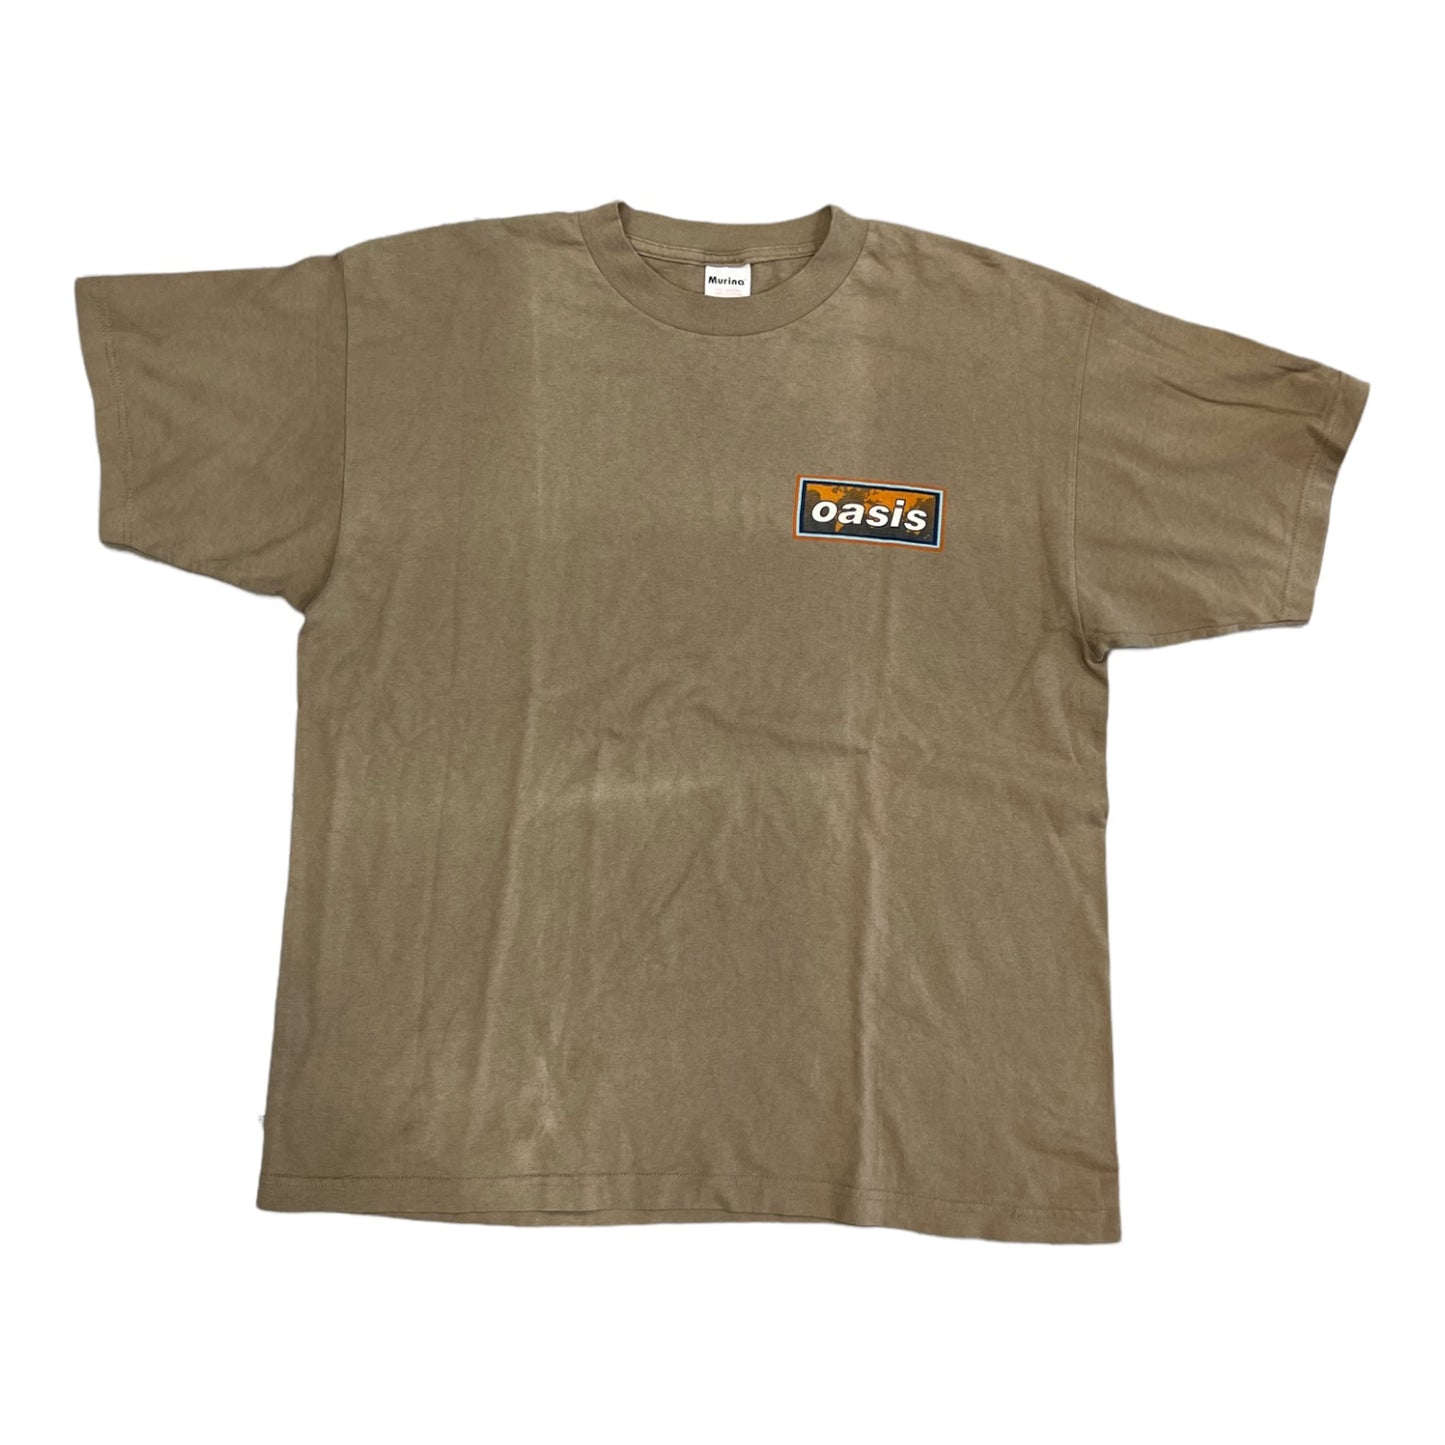 1990's Oasis vintage band-t-shirt